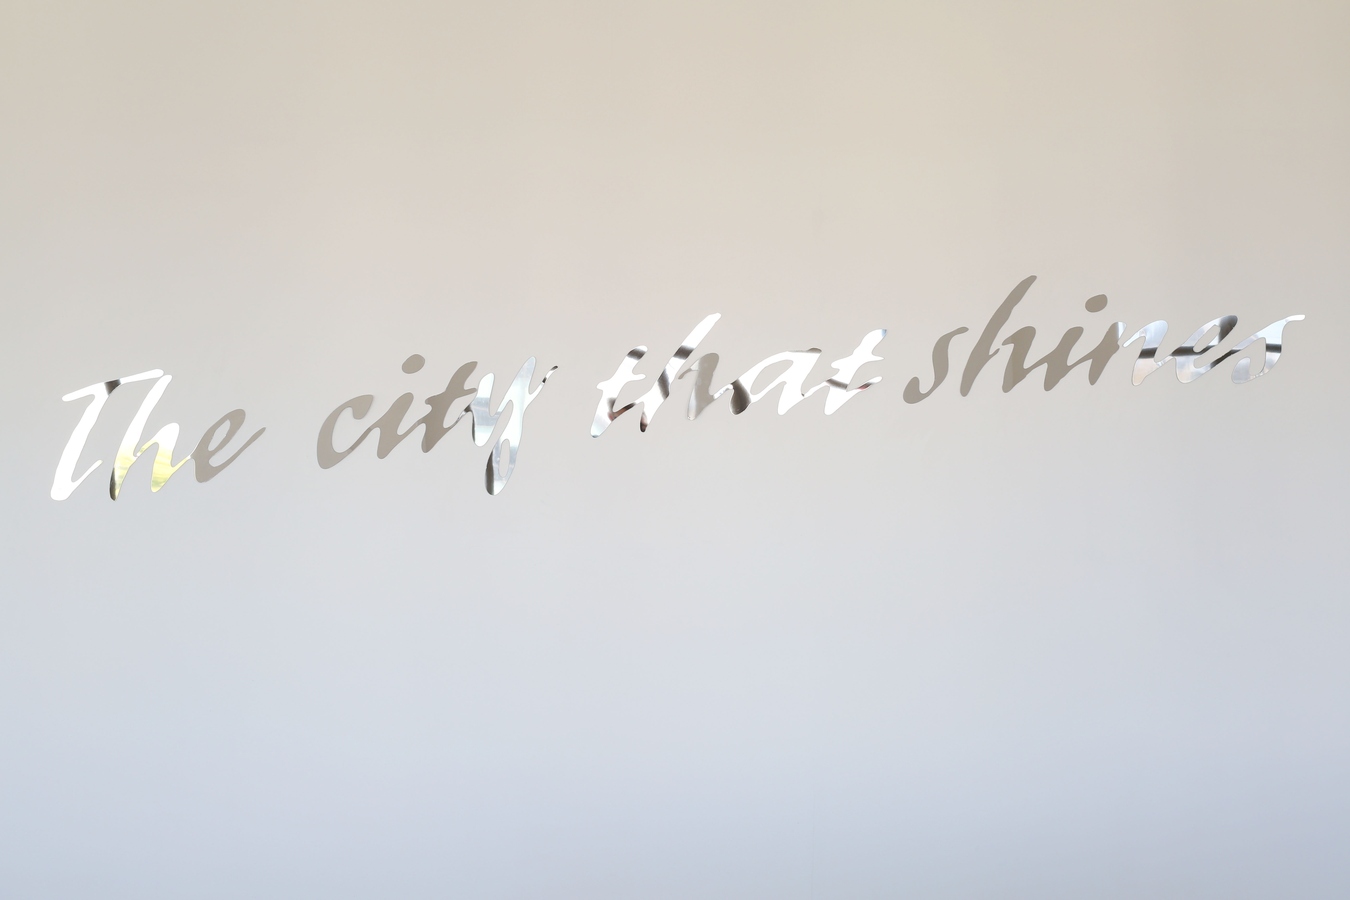 Matthew Galloway, The city that shines, 2016. Image: Daegan Wells.